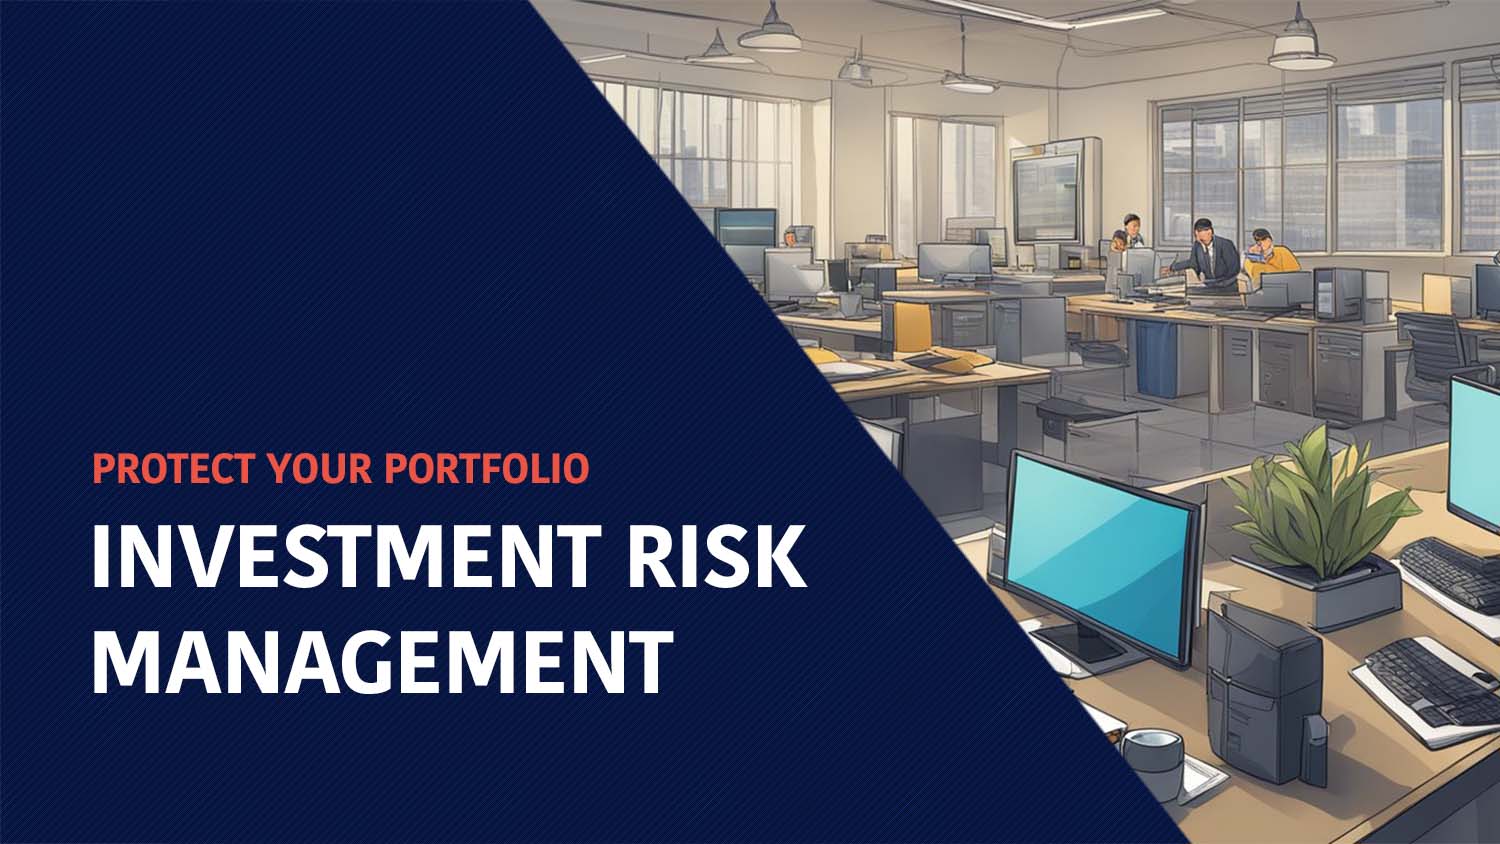 Investment risk management